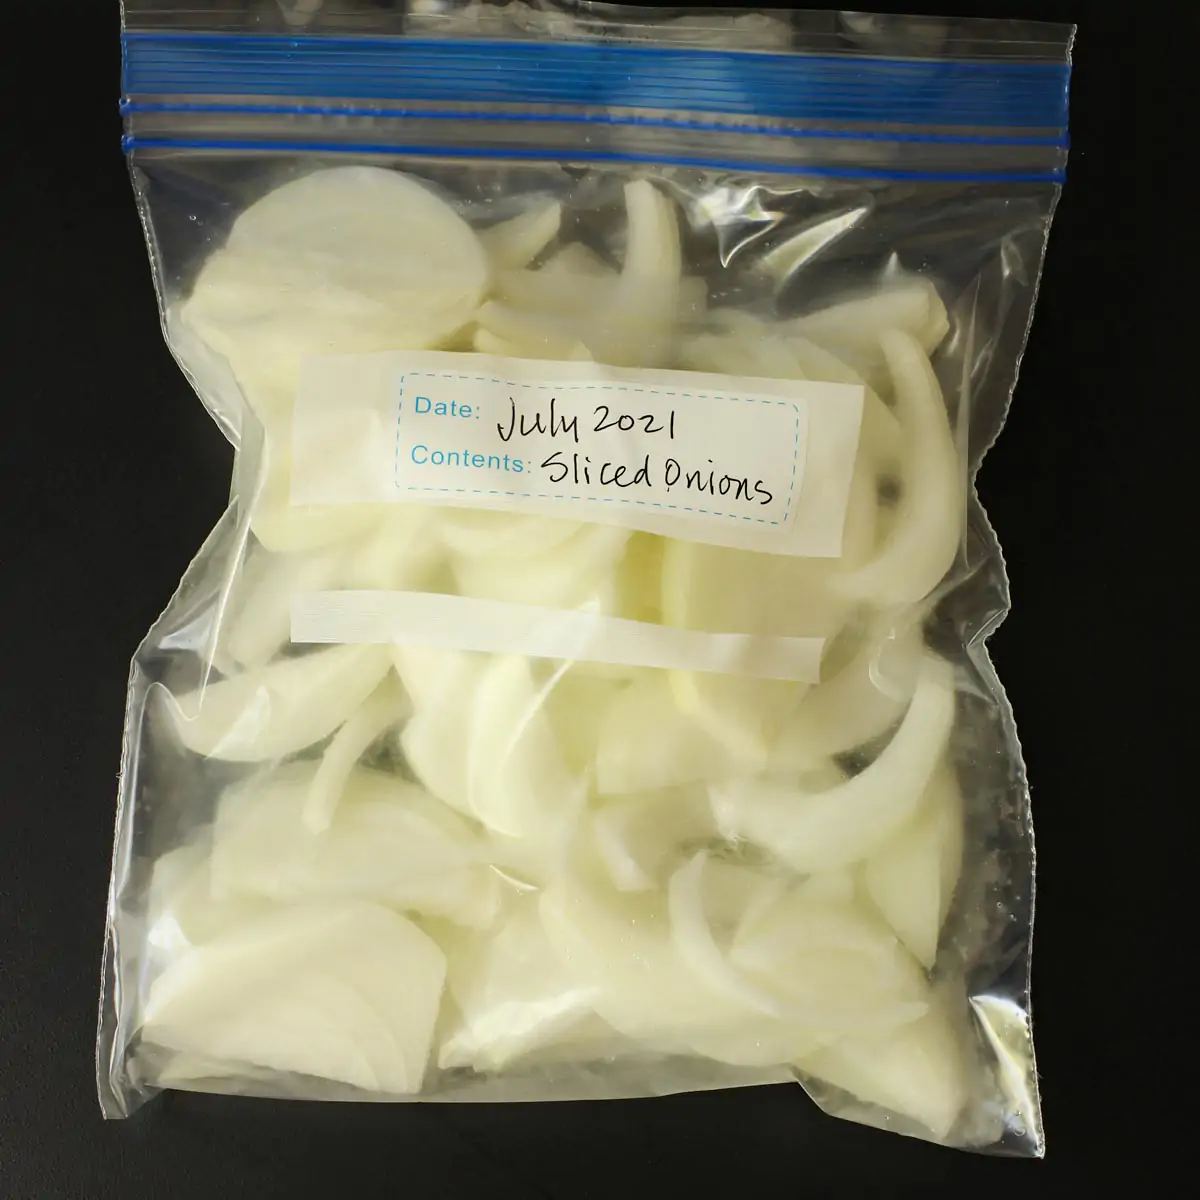 https://goodcheapeats.com/wp-content/uploads/2021/07/frozen-onions-in-bag-square.jpg